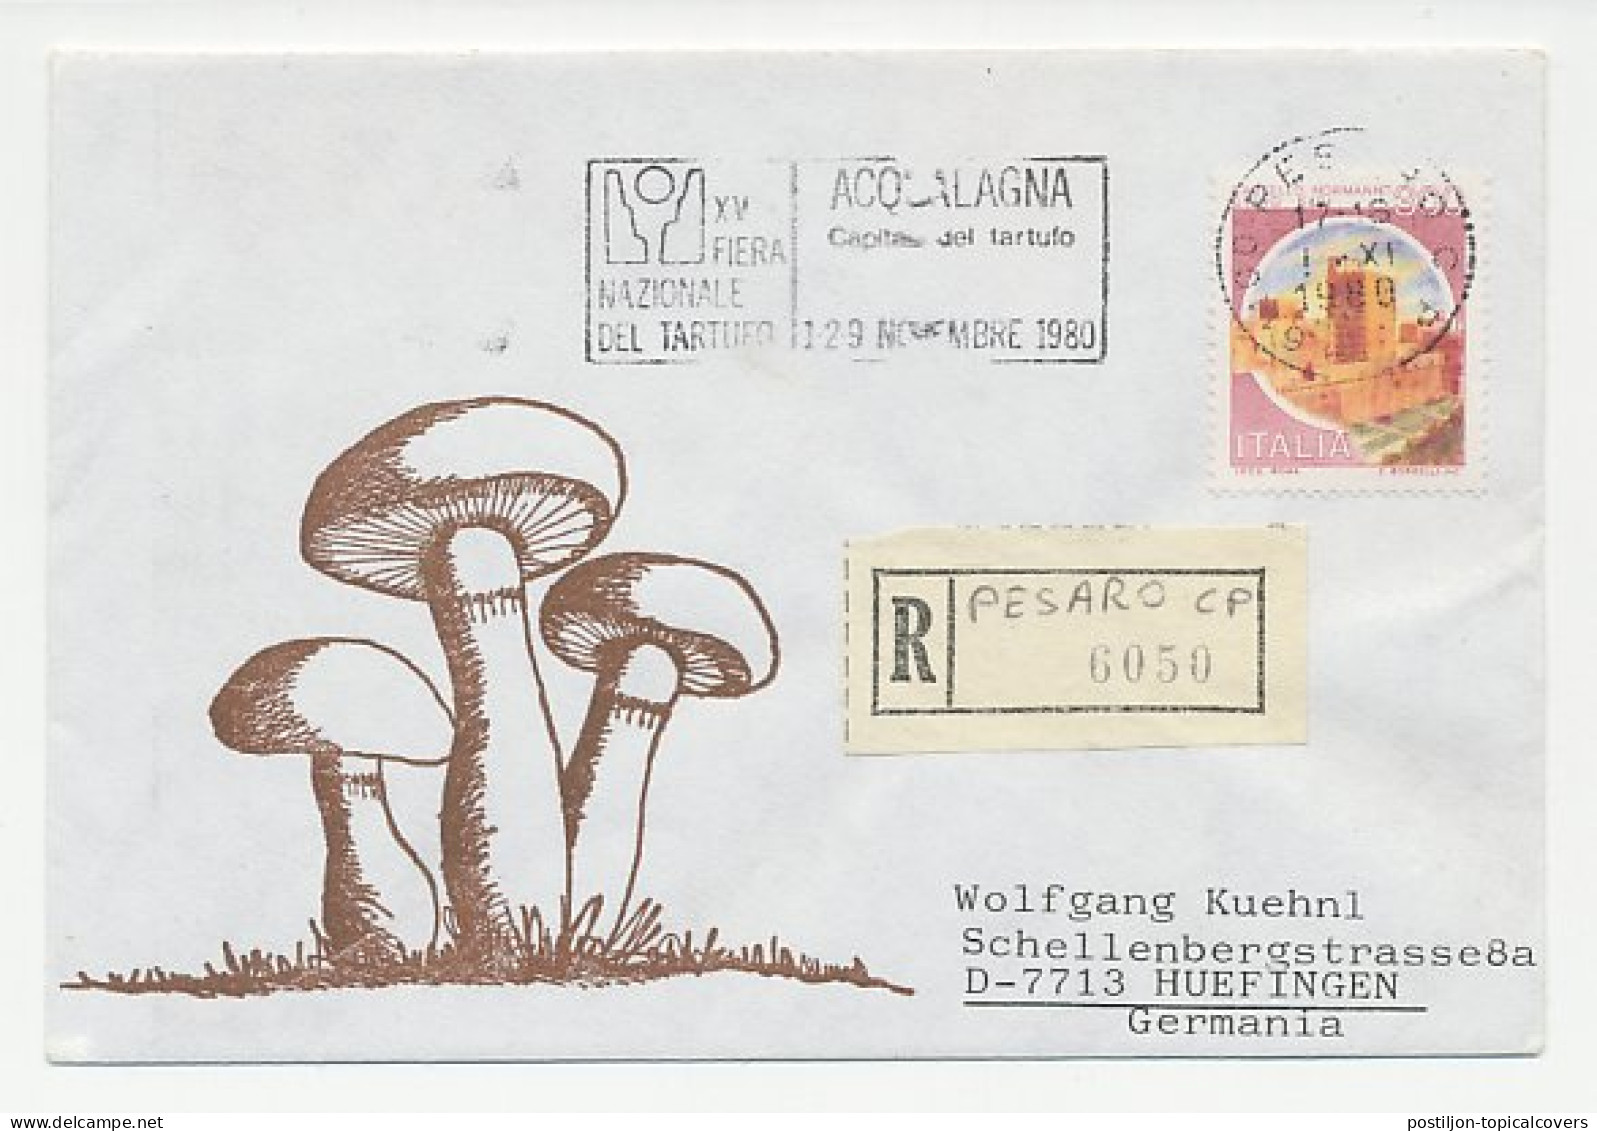 Registered Cover / Postmark Italy 1980 Truffle - National Fair Acqulagna - Mushrooms